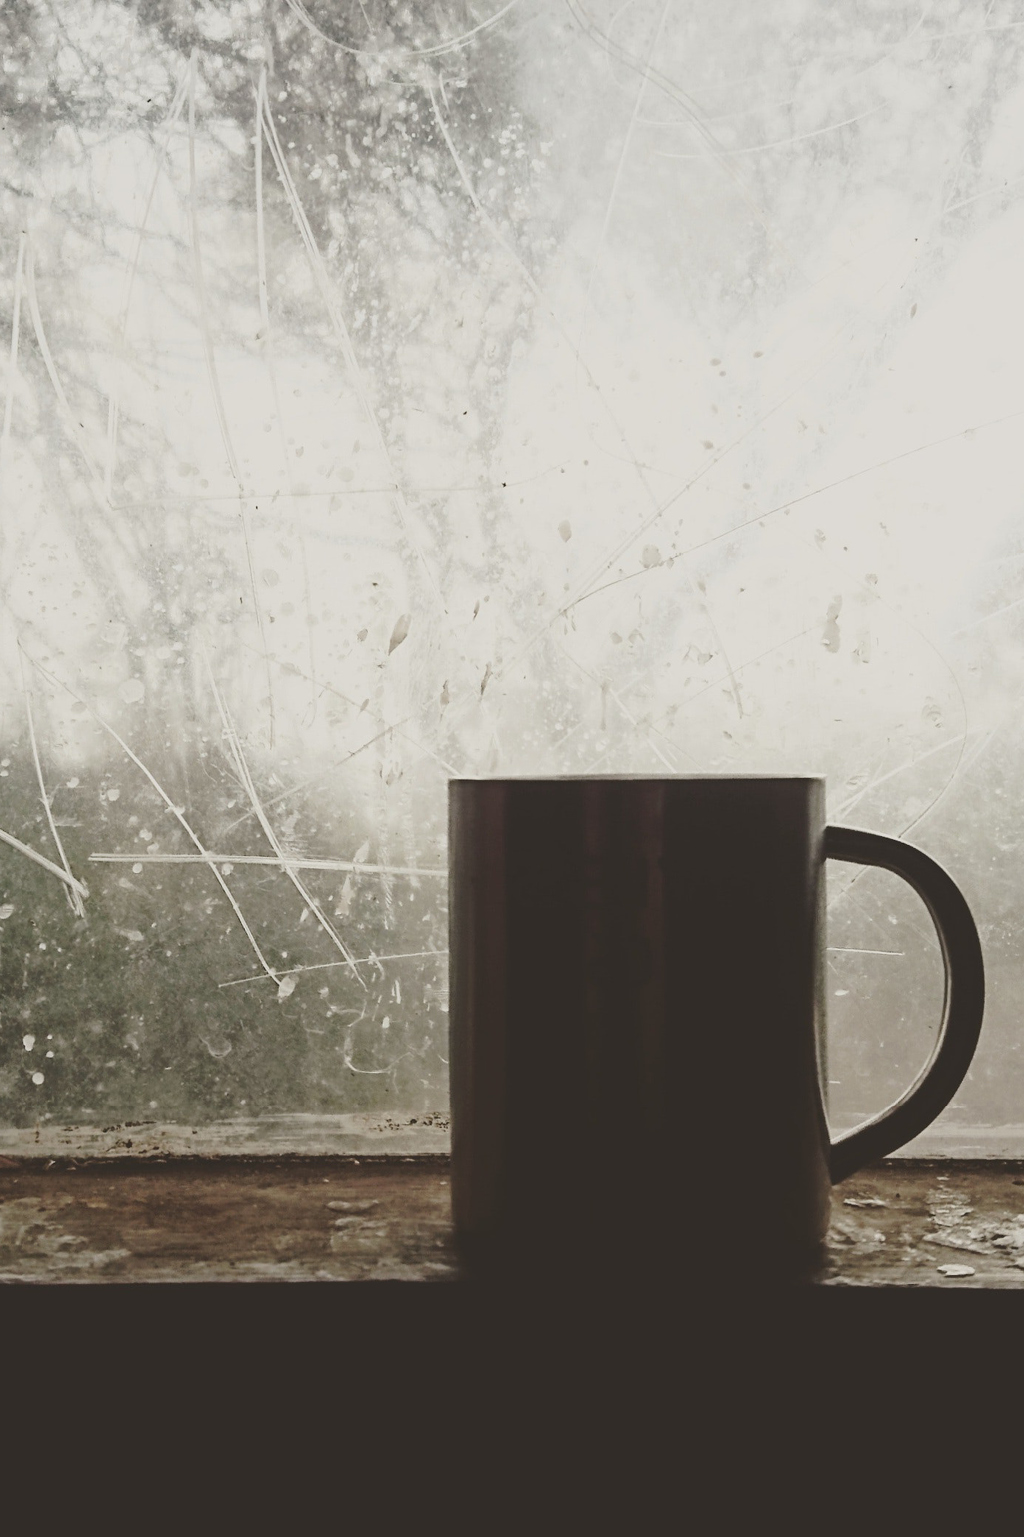 silhouette of coffee mug on windowsill